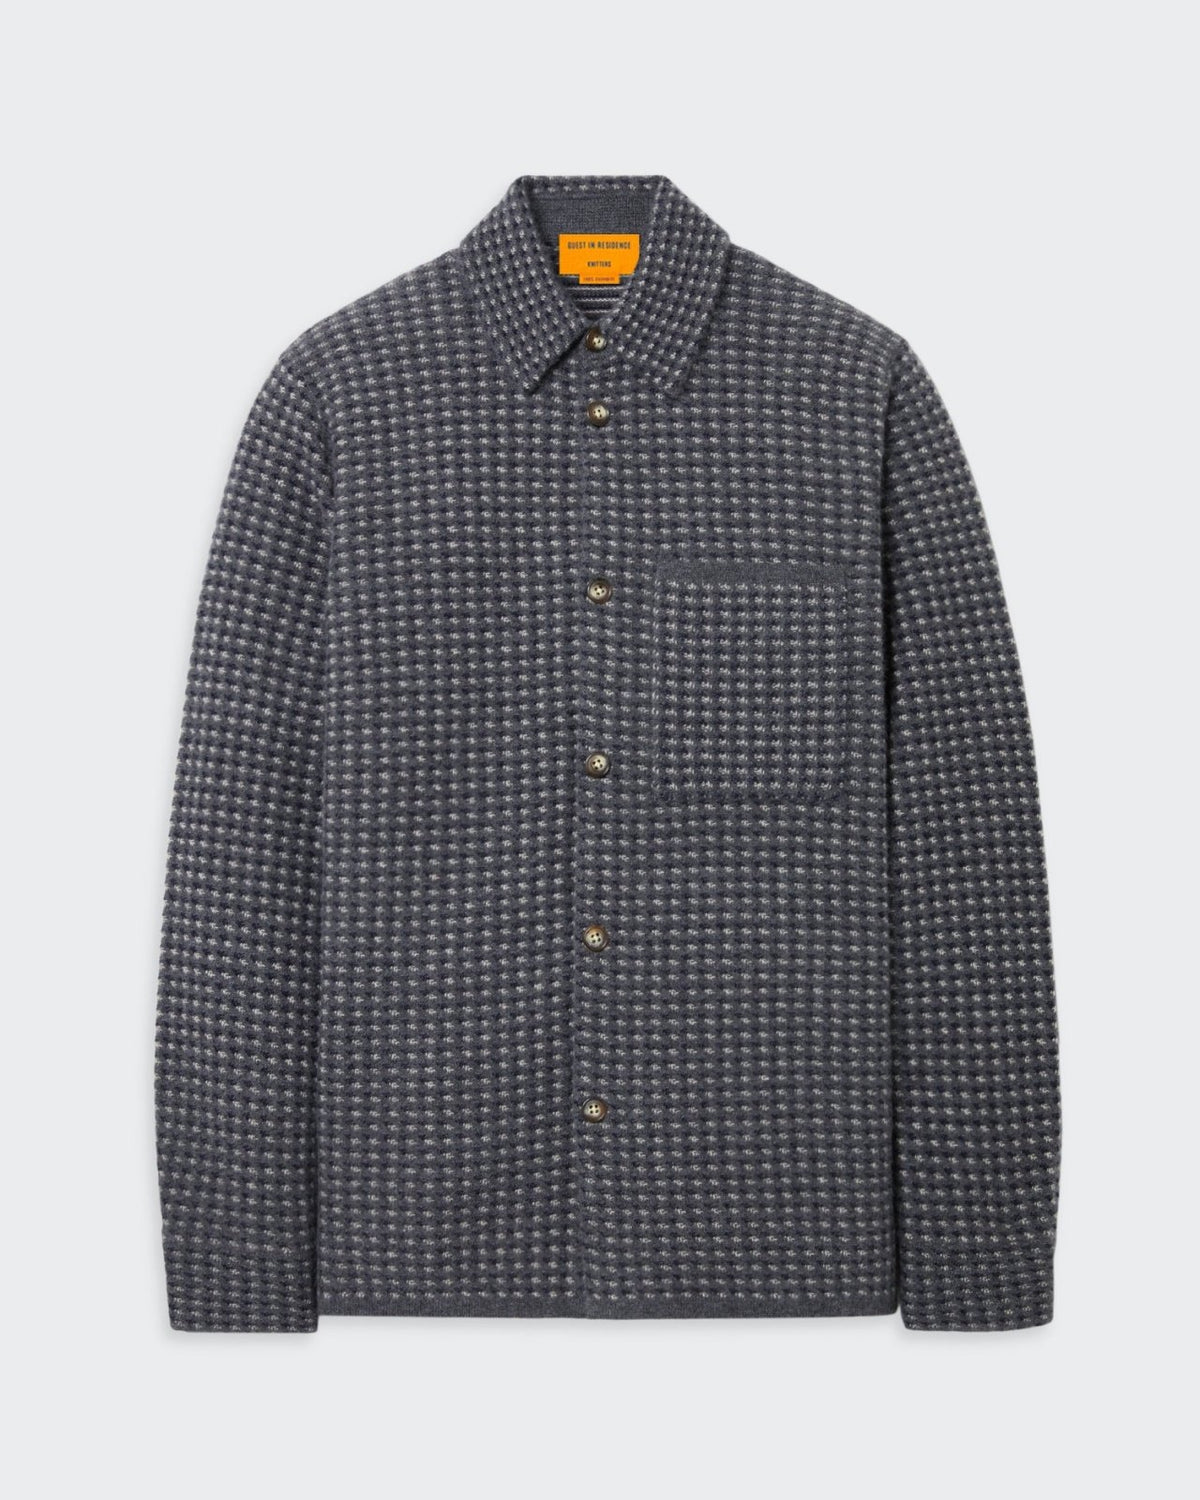 Tweed Work Shirt - Charcoal/Oatmeal/Midnight